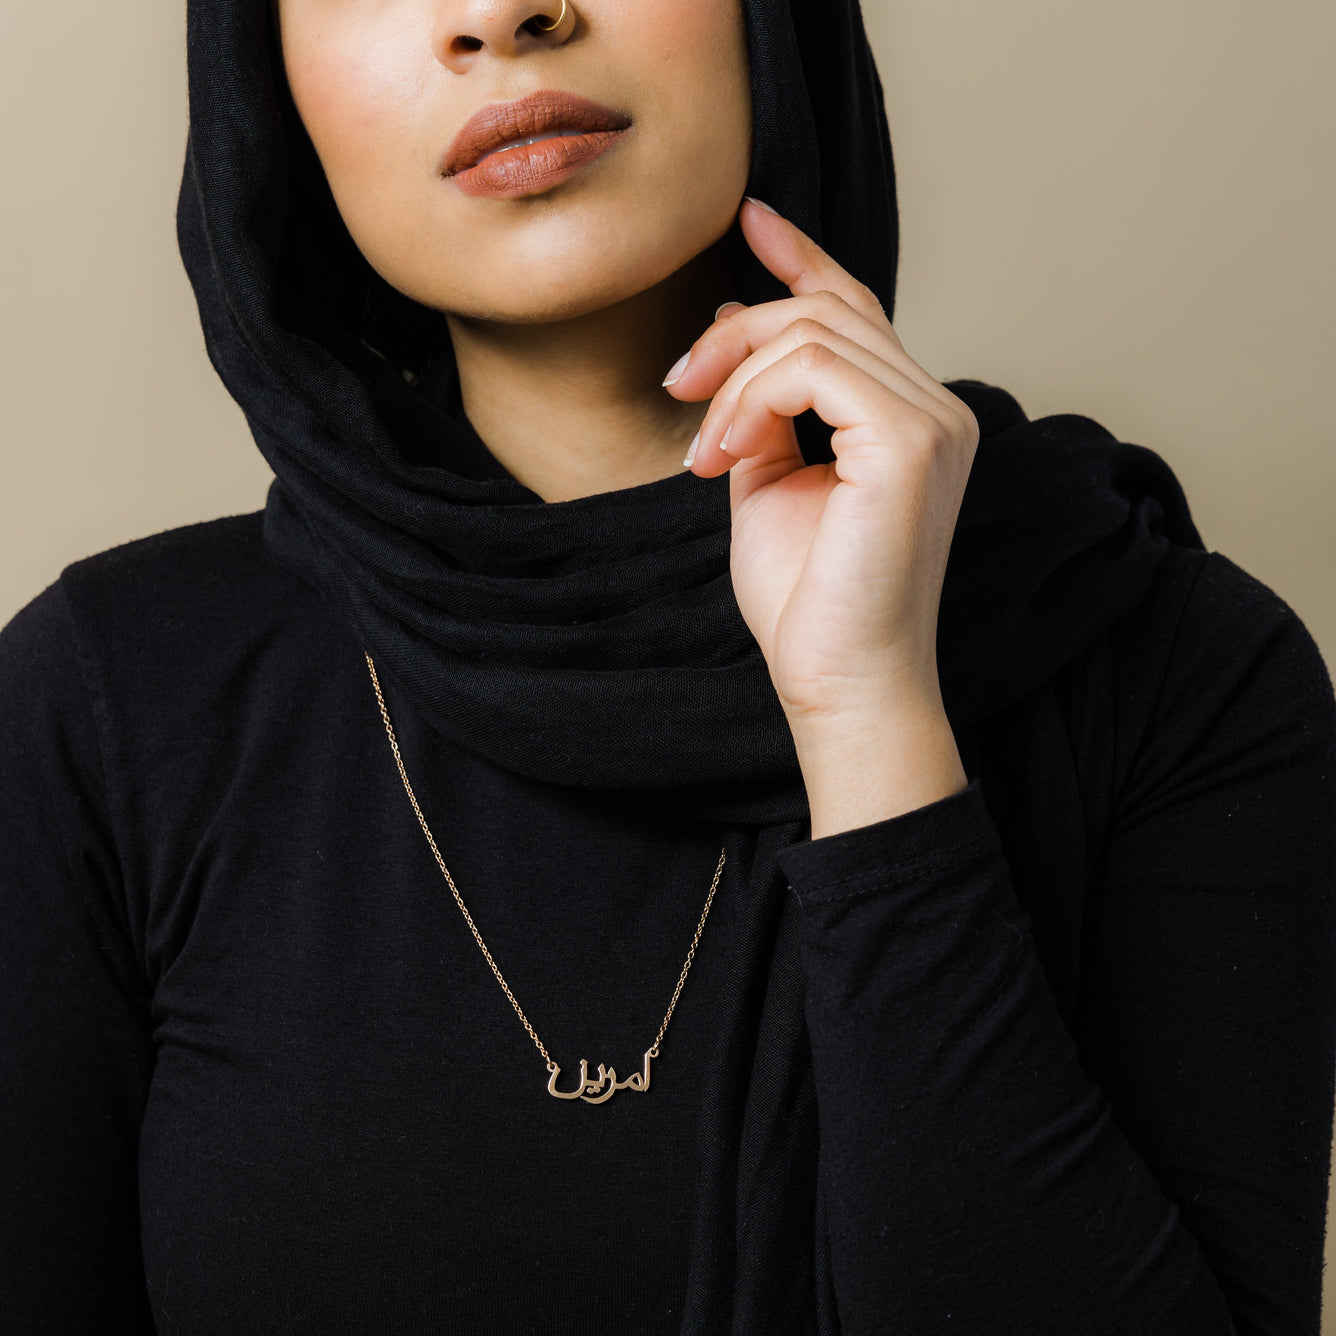 Arabic Custom Name Necklace, Personalized Jewelry, Name Jewelry